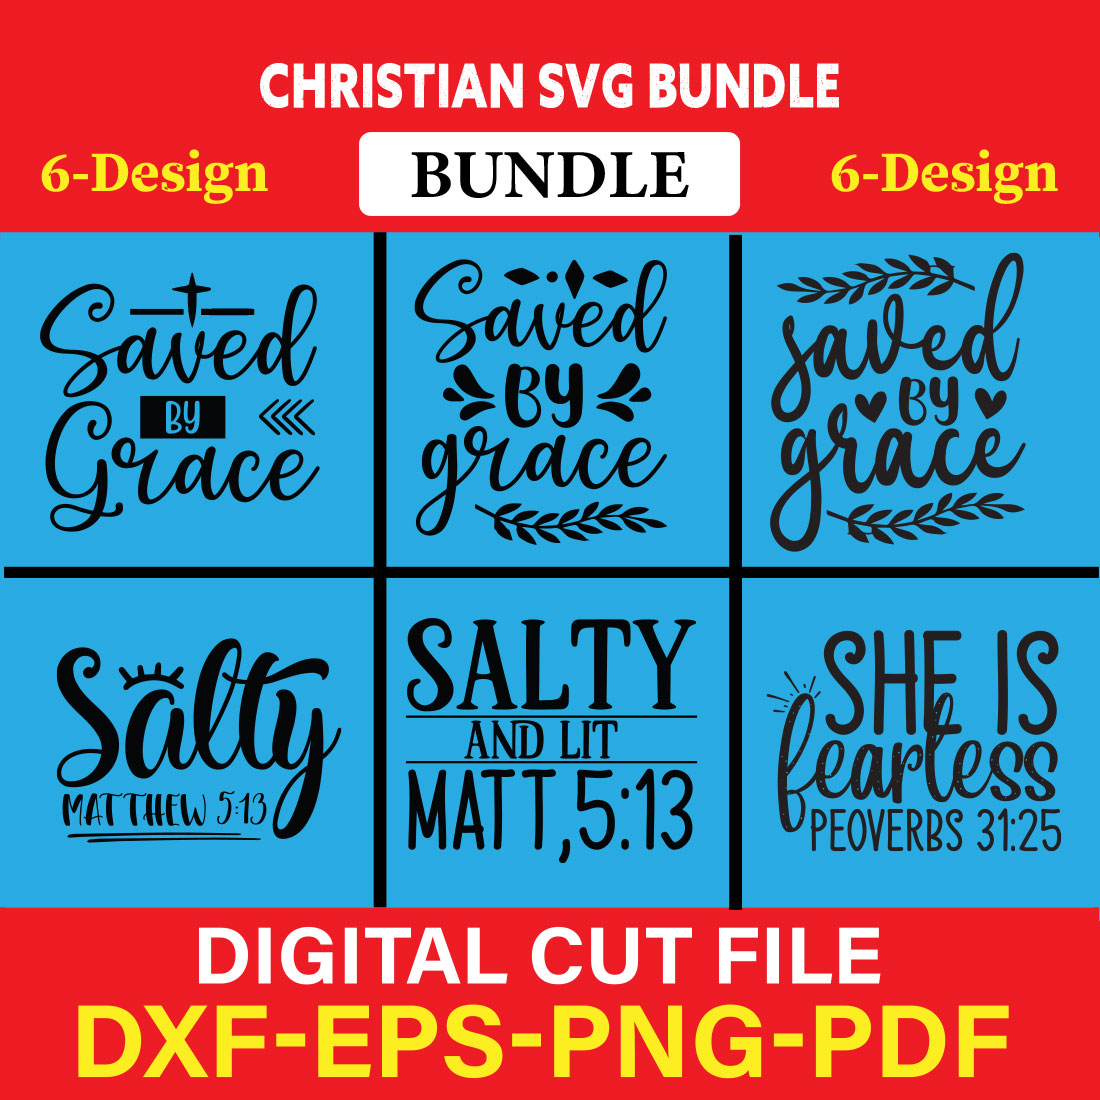 Christian T-shirt Design Bundle Vol-22 cover image.